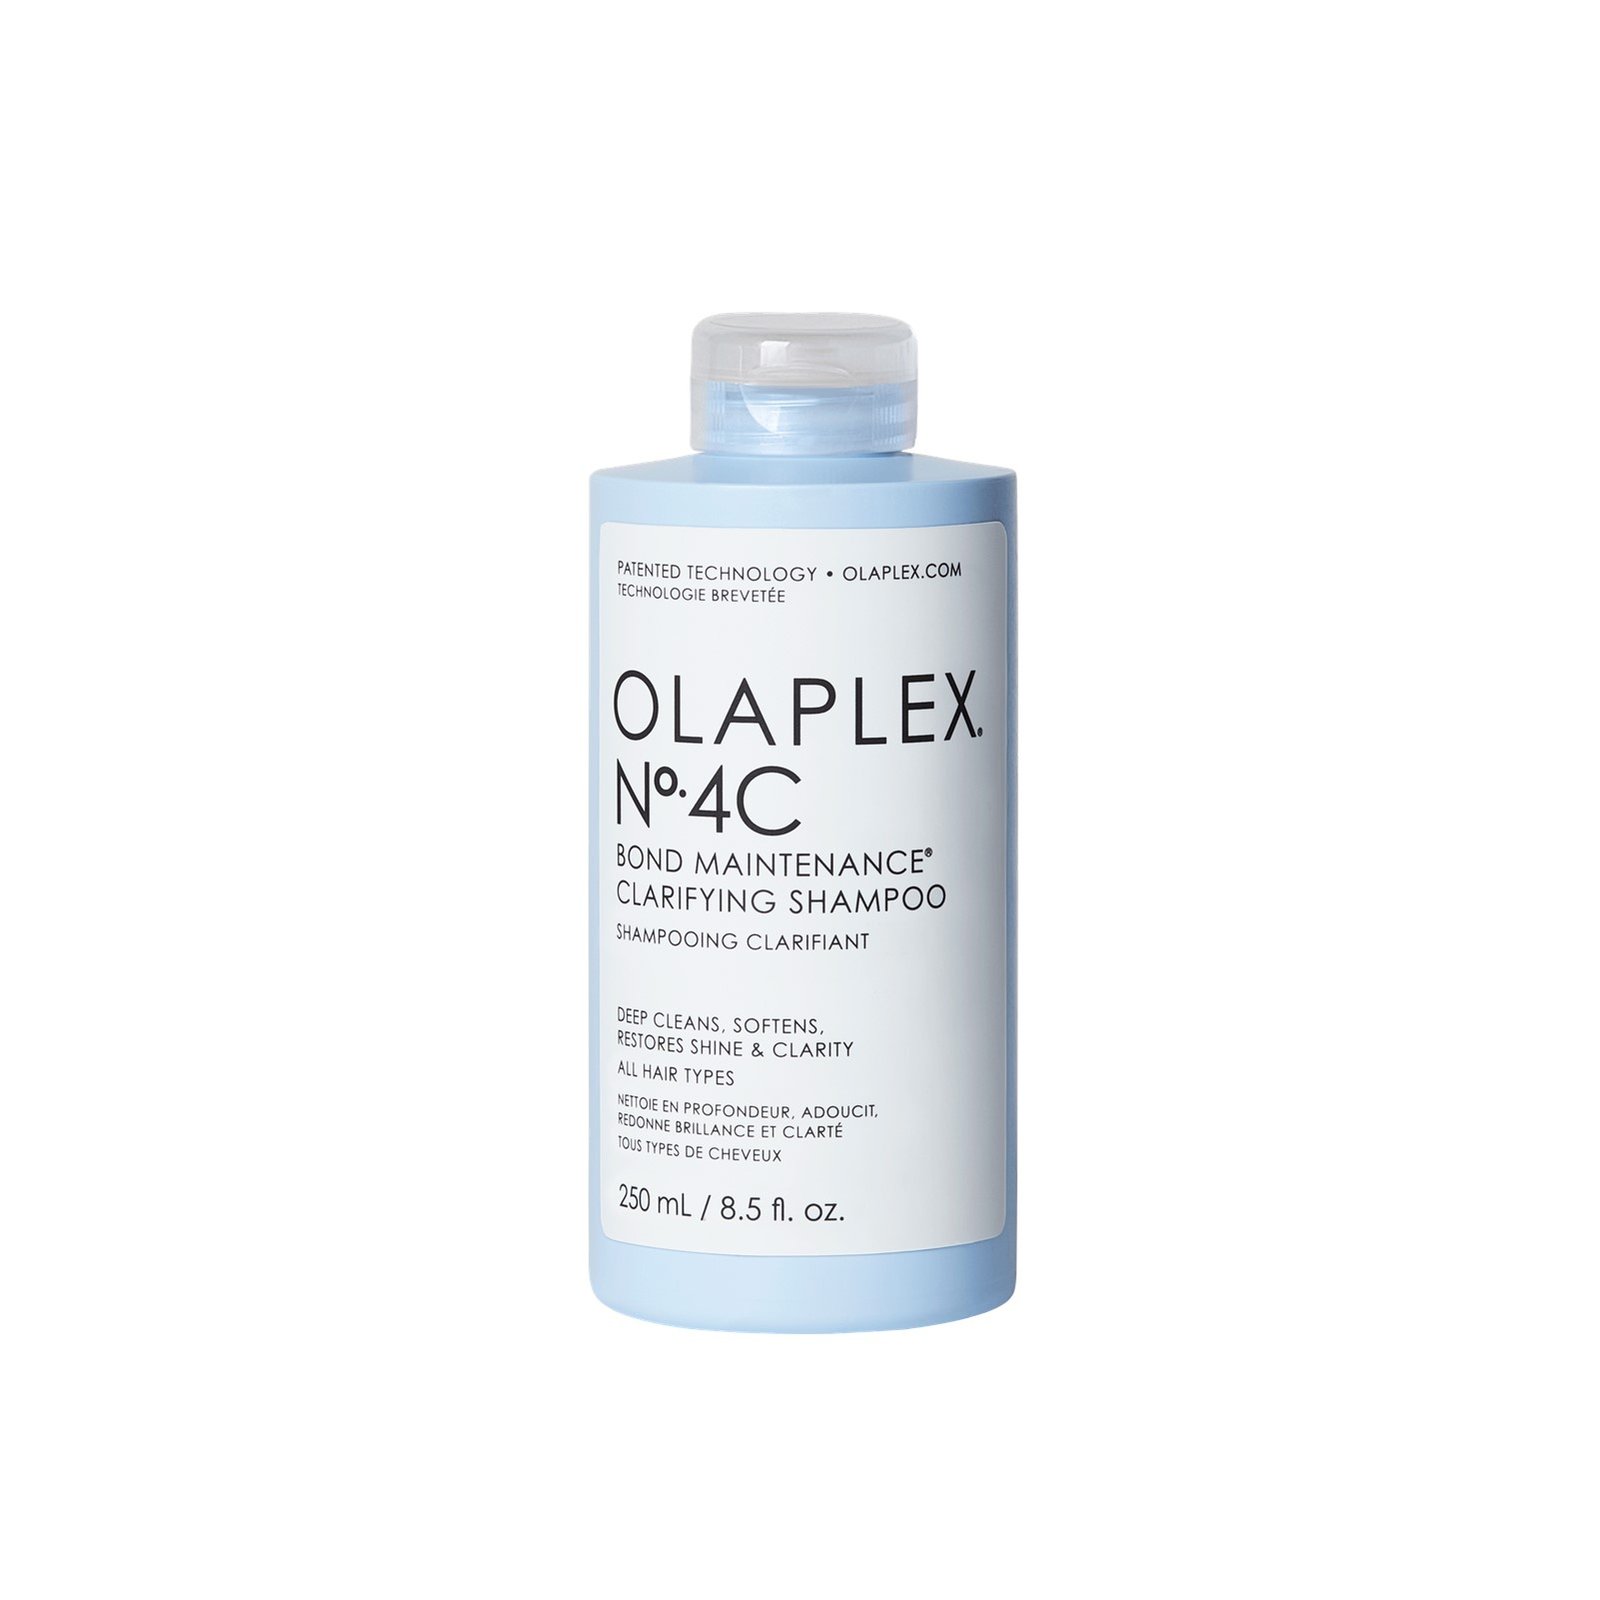 OLAPLEX Bond Maintenance Clarifying Shampoo Nº4C 250ml